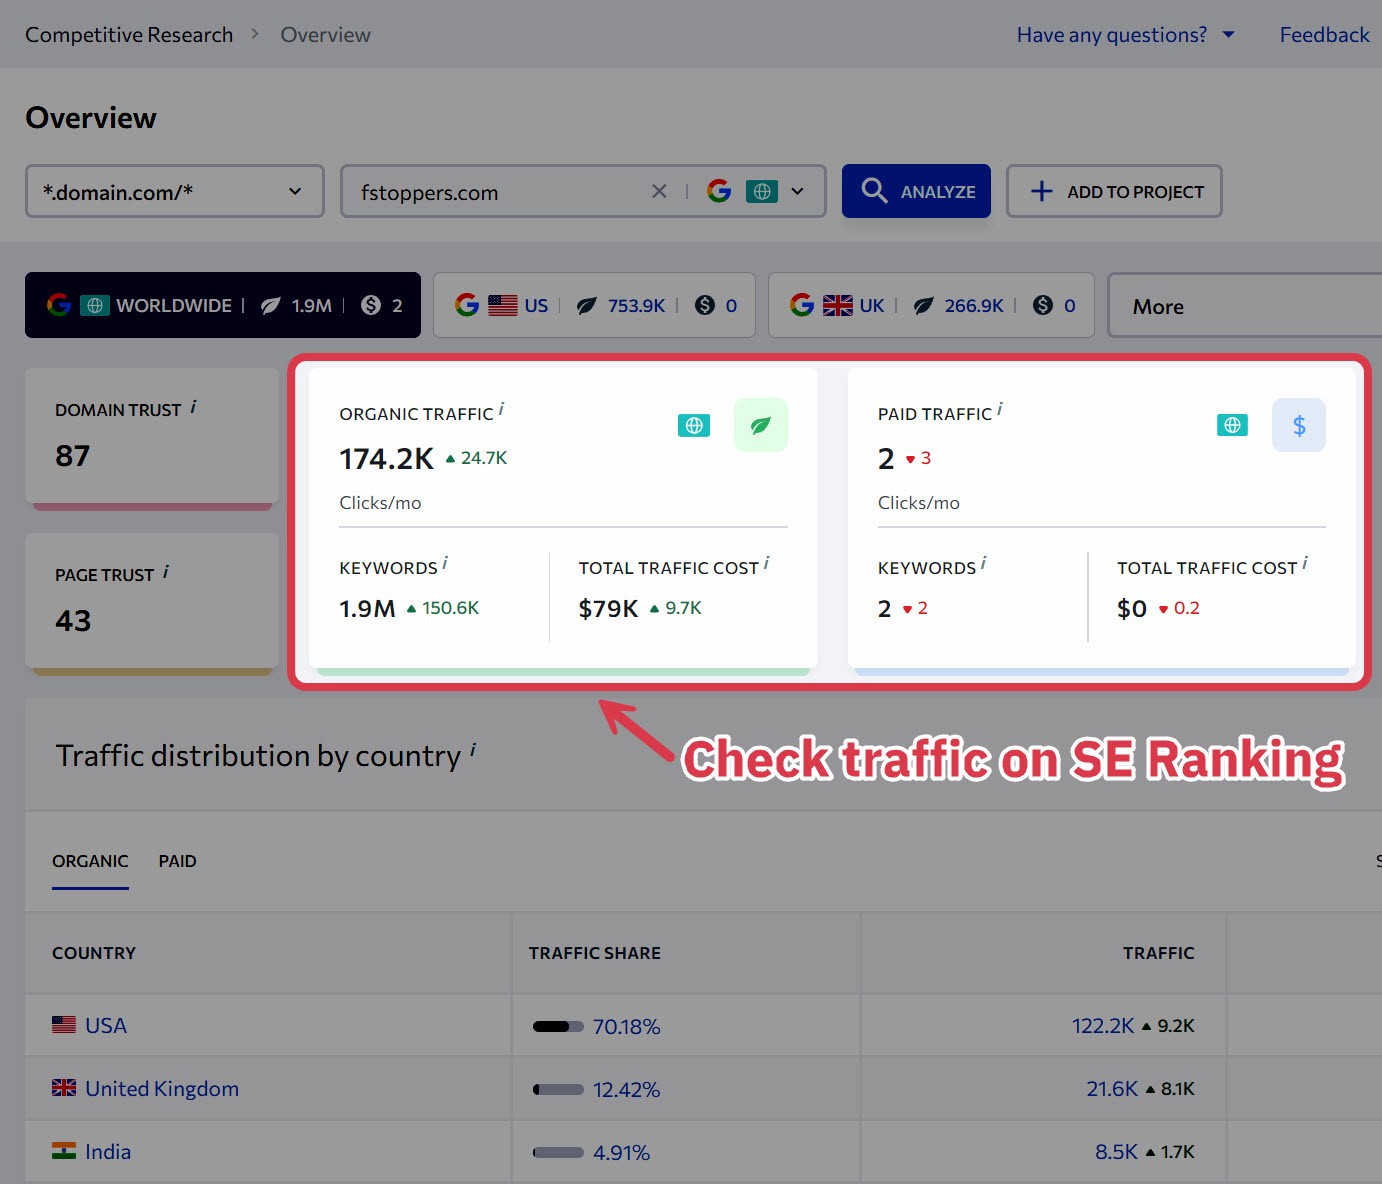 fstoppers.com SE Ranking traffic report